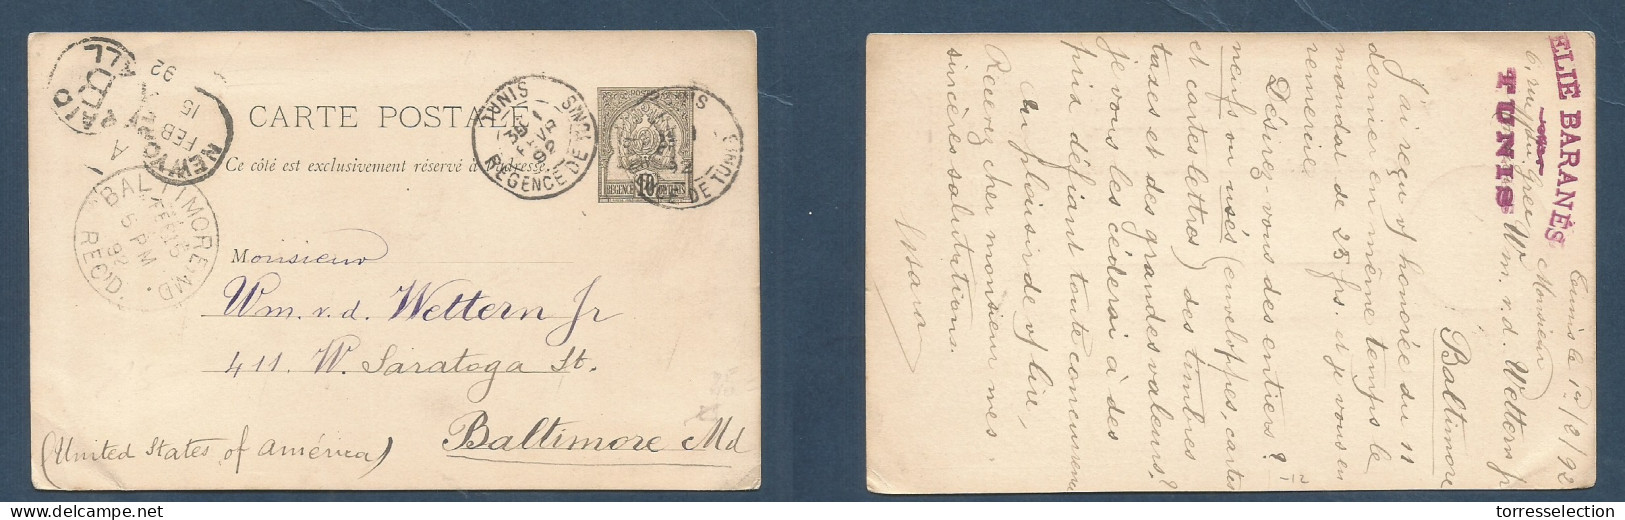 TUNISIA. 1892 (1 Febr) GPO - USA, Baltimore, Md (15 Feb) 10c Black Early Stat Card. Fine Used Via NYC. XSALE. - Tunisia